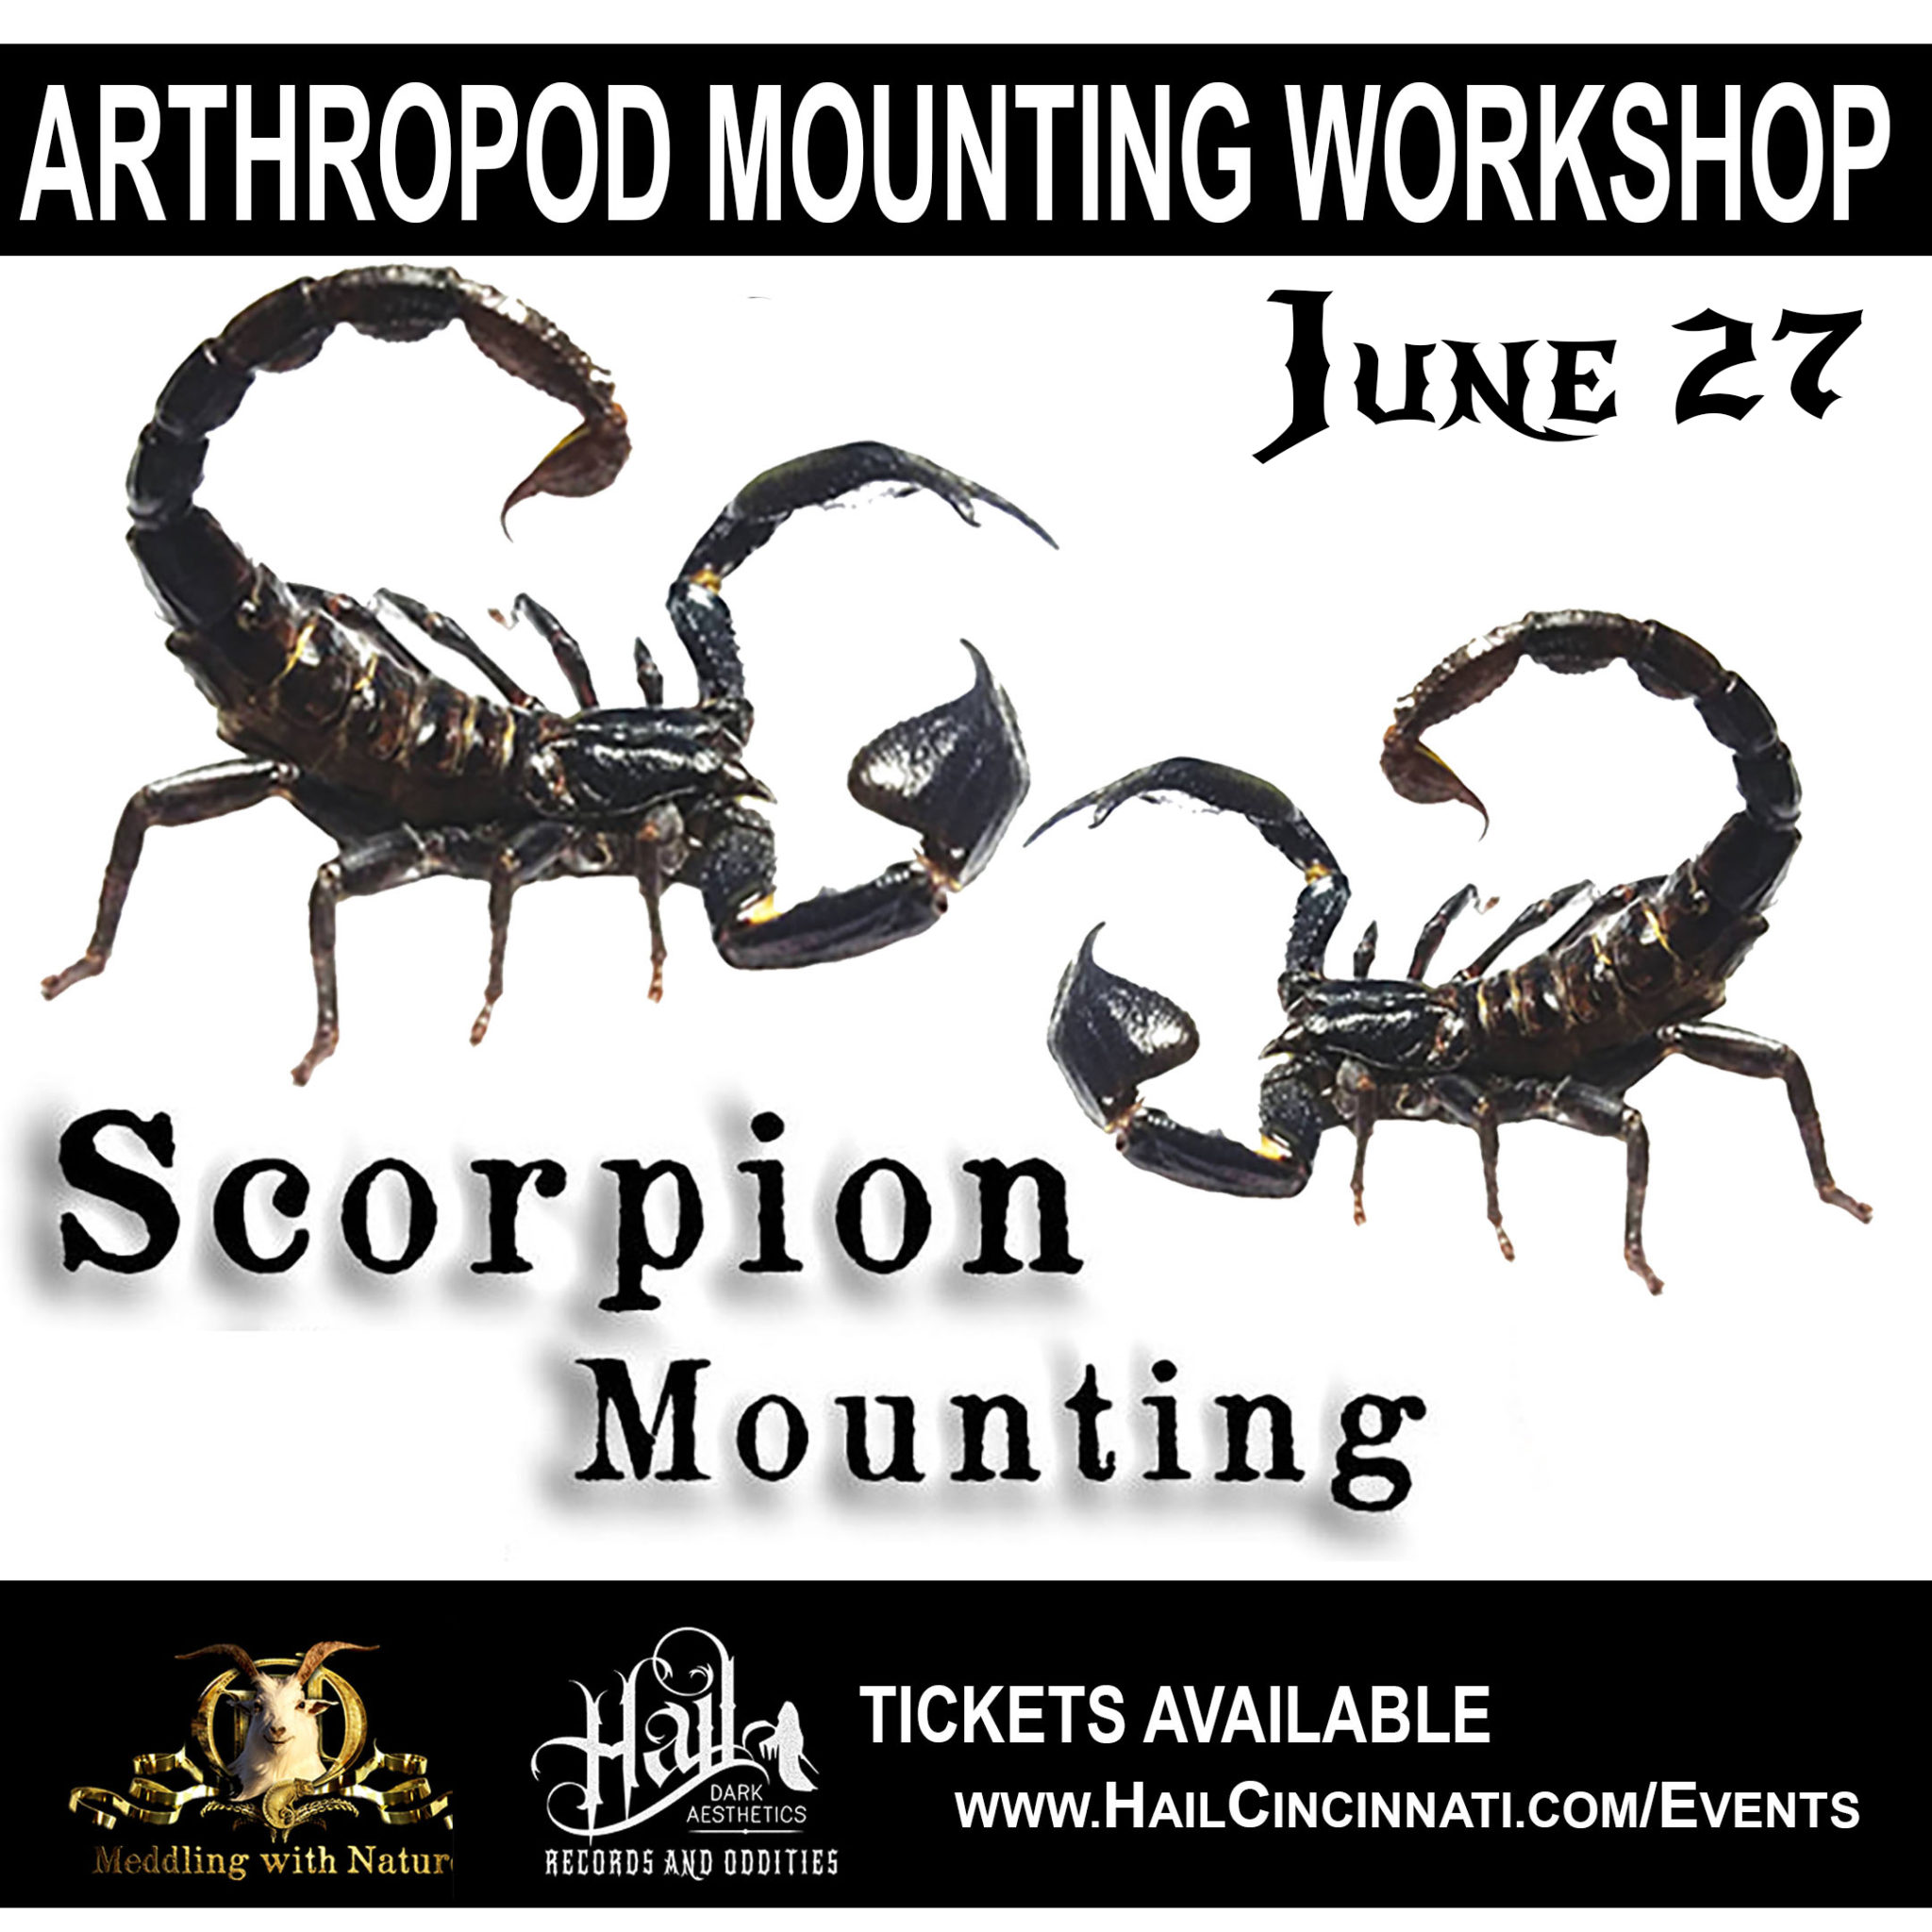 June 27, 2019 – Scorpion Mounting